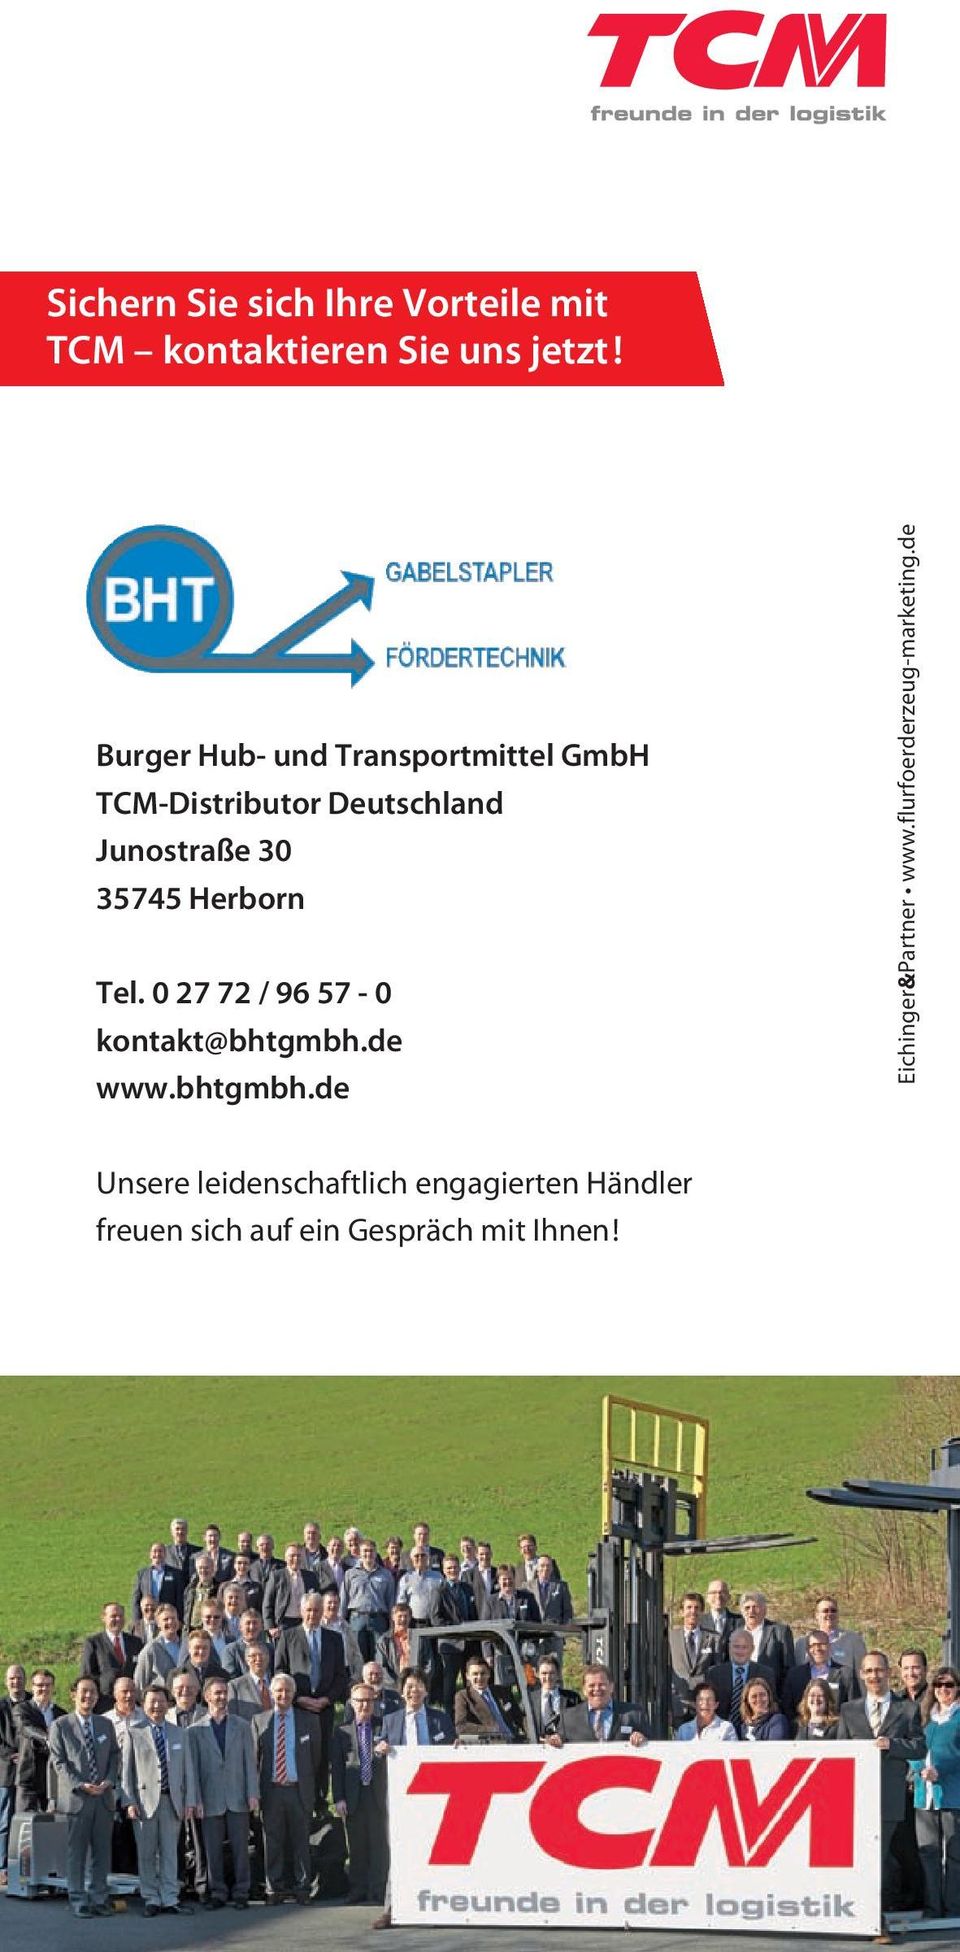 Herborn Tel. 0 27 72 / 96 57-0 kontakt@bhtgmbh.de www.bhtgmbh.de Eichinger&Partner www.